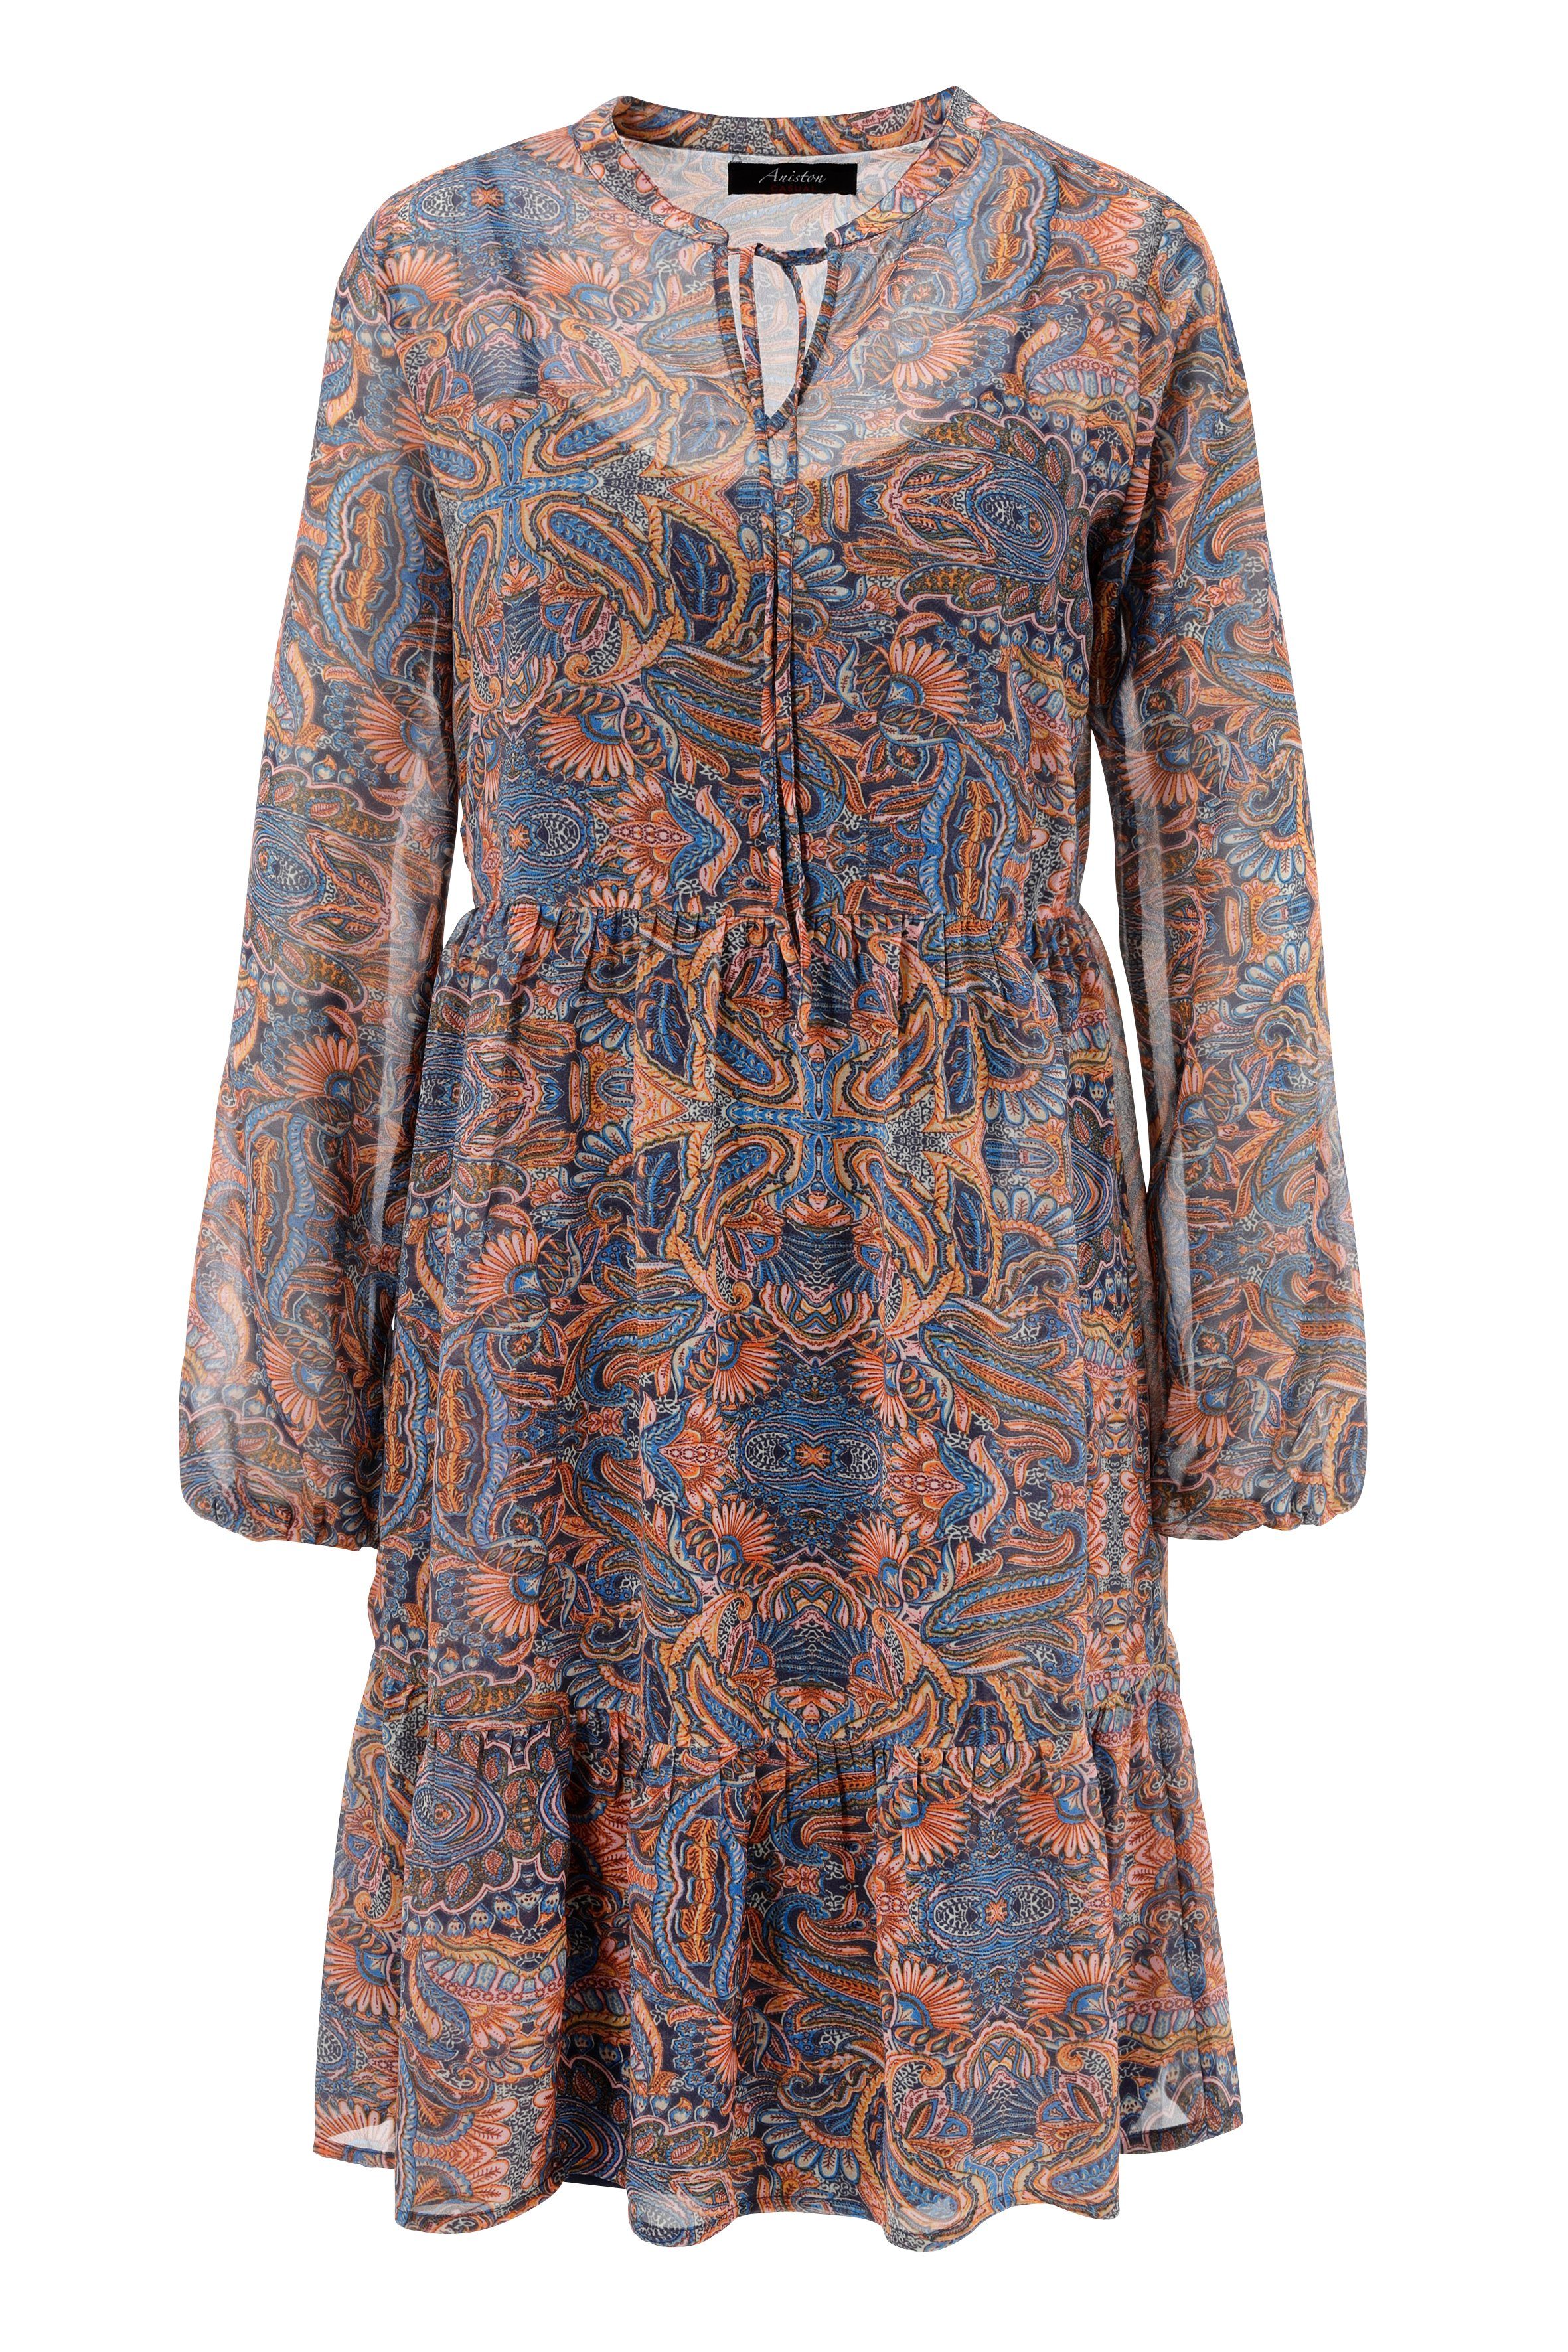 Aniston CASUAL Blusenkleid Paisley-Muster bedruckt mit phantasievollem